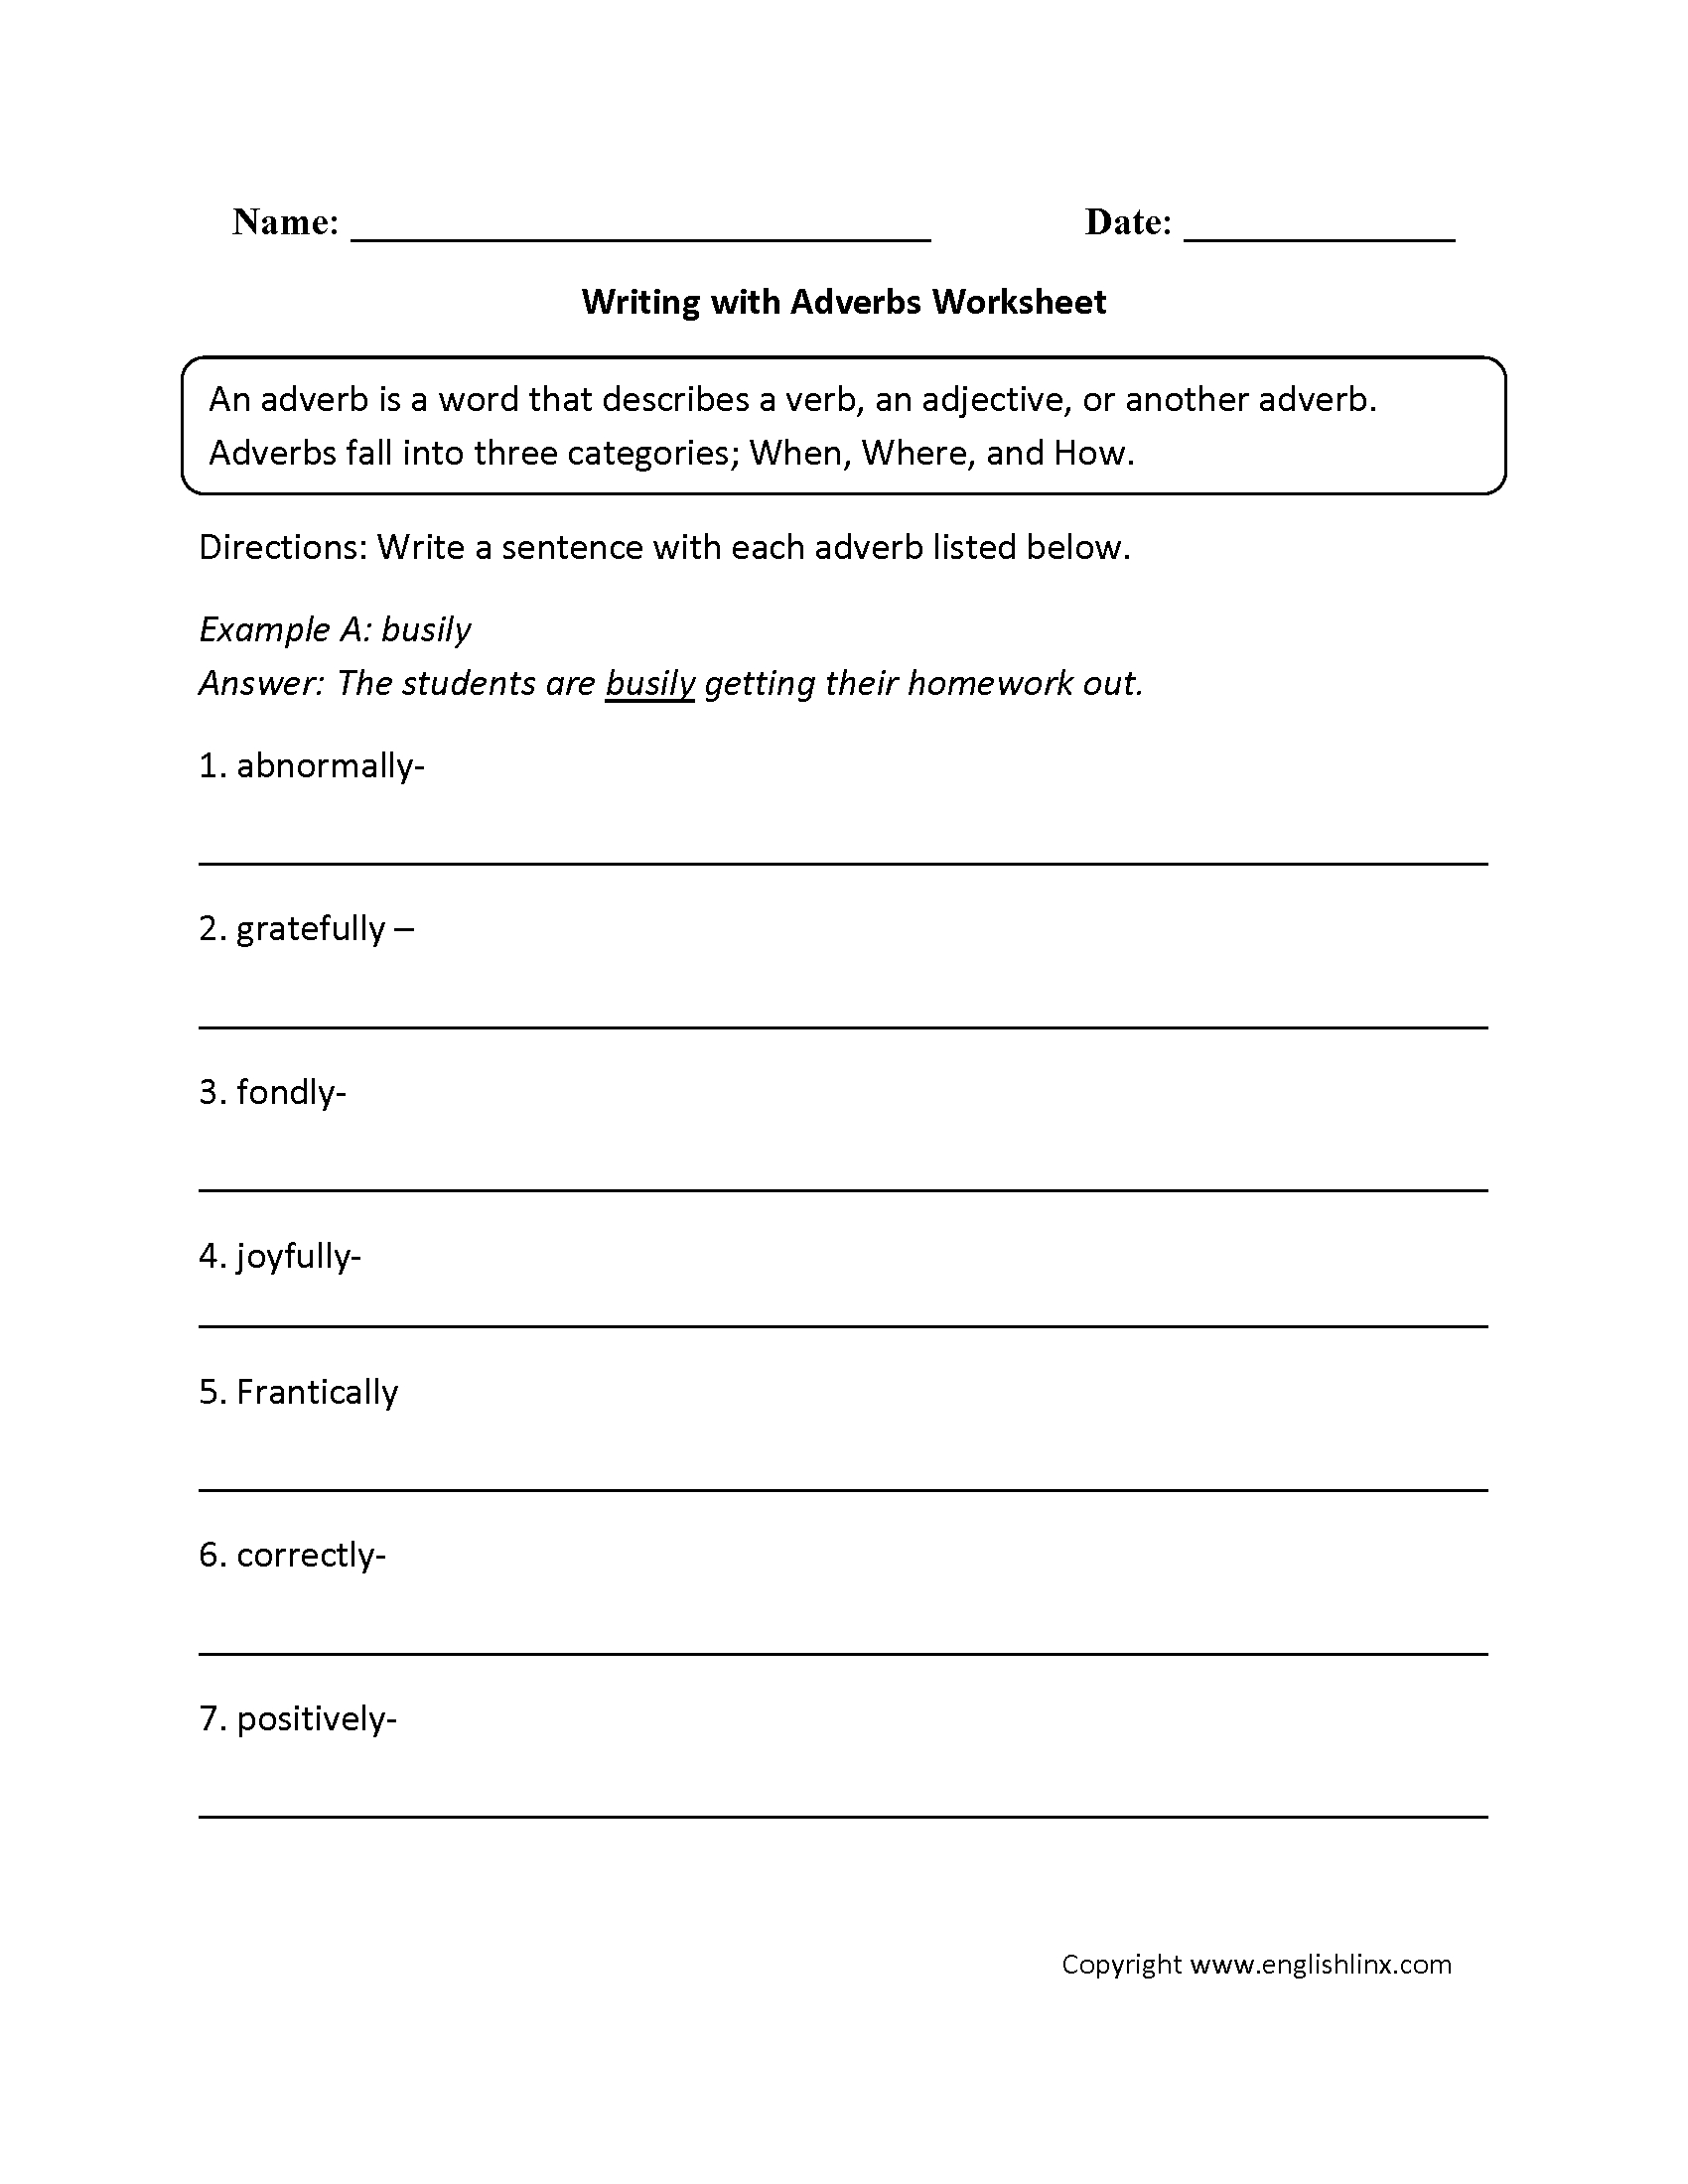 adverb-worksheets-pdf-db-excel